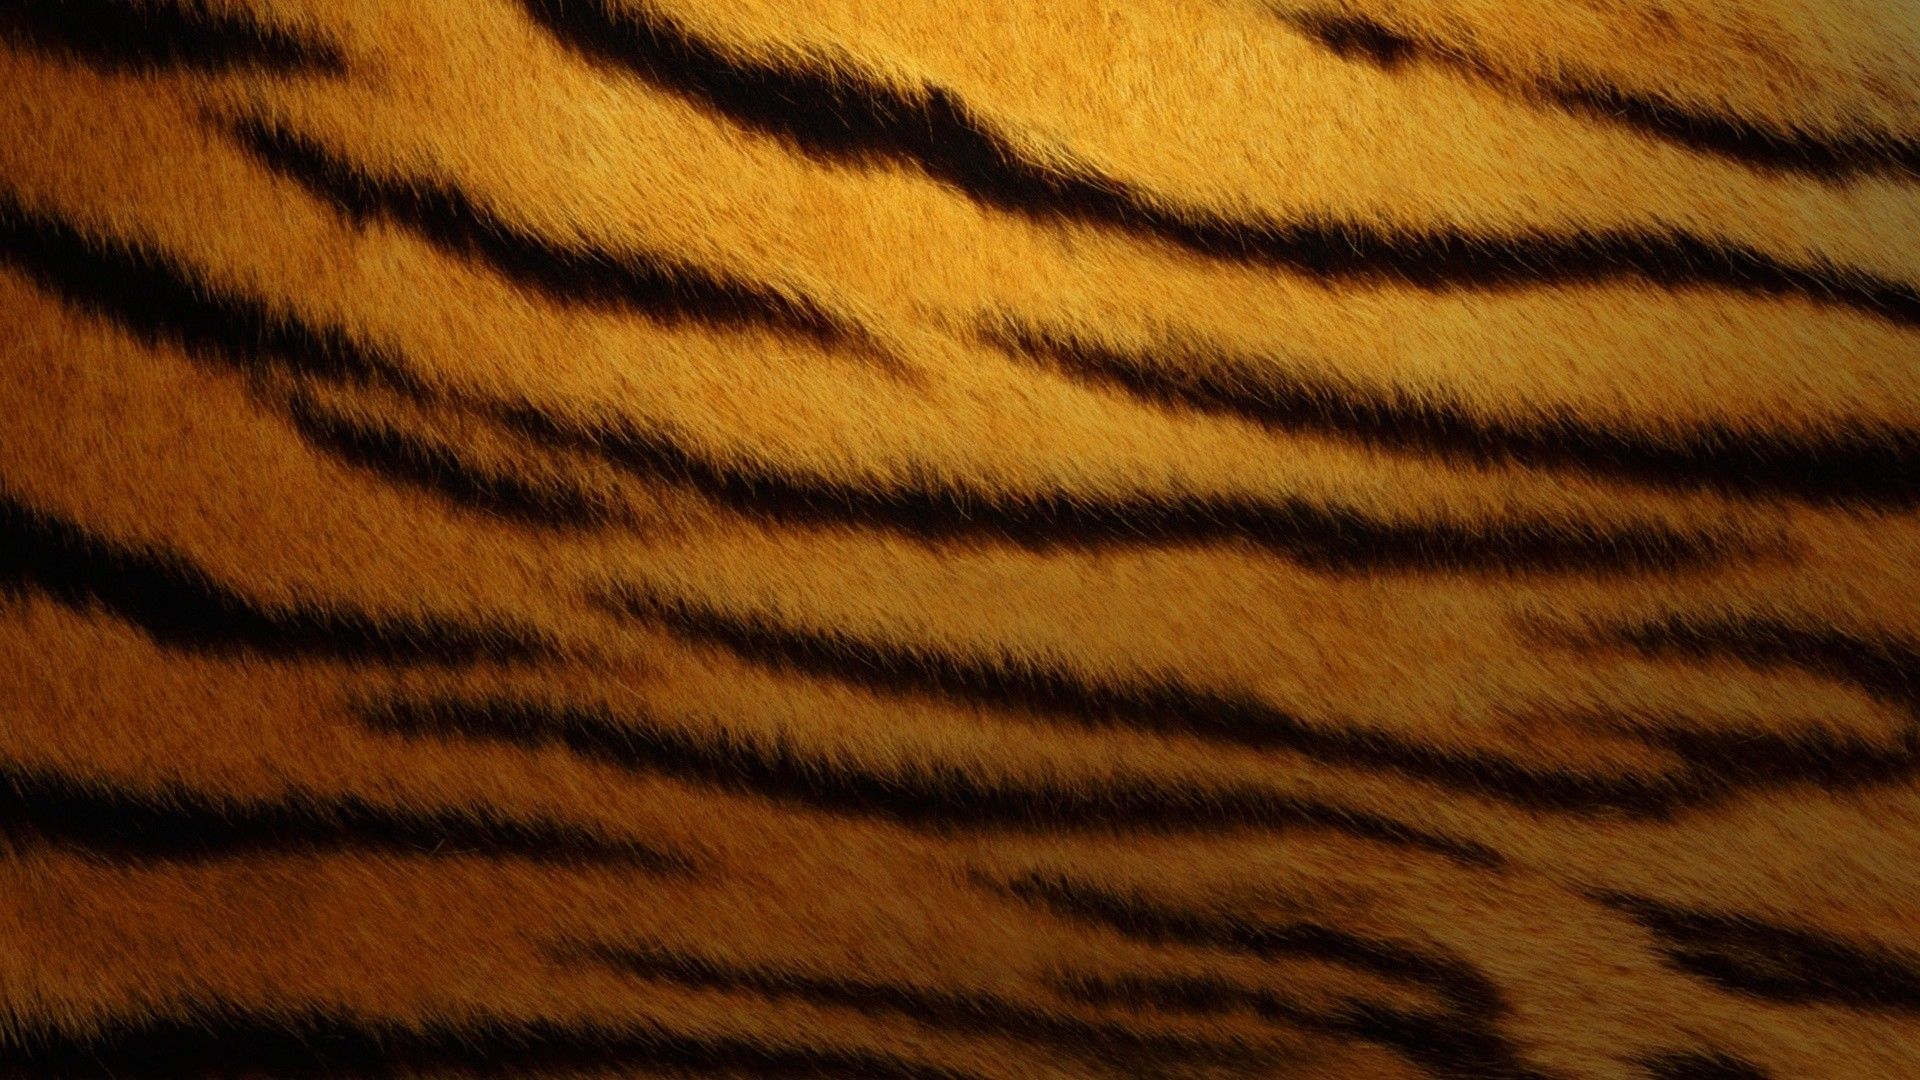 Download Wallpaper, Download 2560x1440 tigers skin animal print 1920x1080 wallpaper Animals HD Wallpaper, Hi Res Animals Wallpaper, High Definition Wallpaper